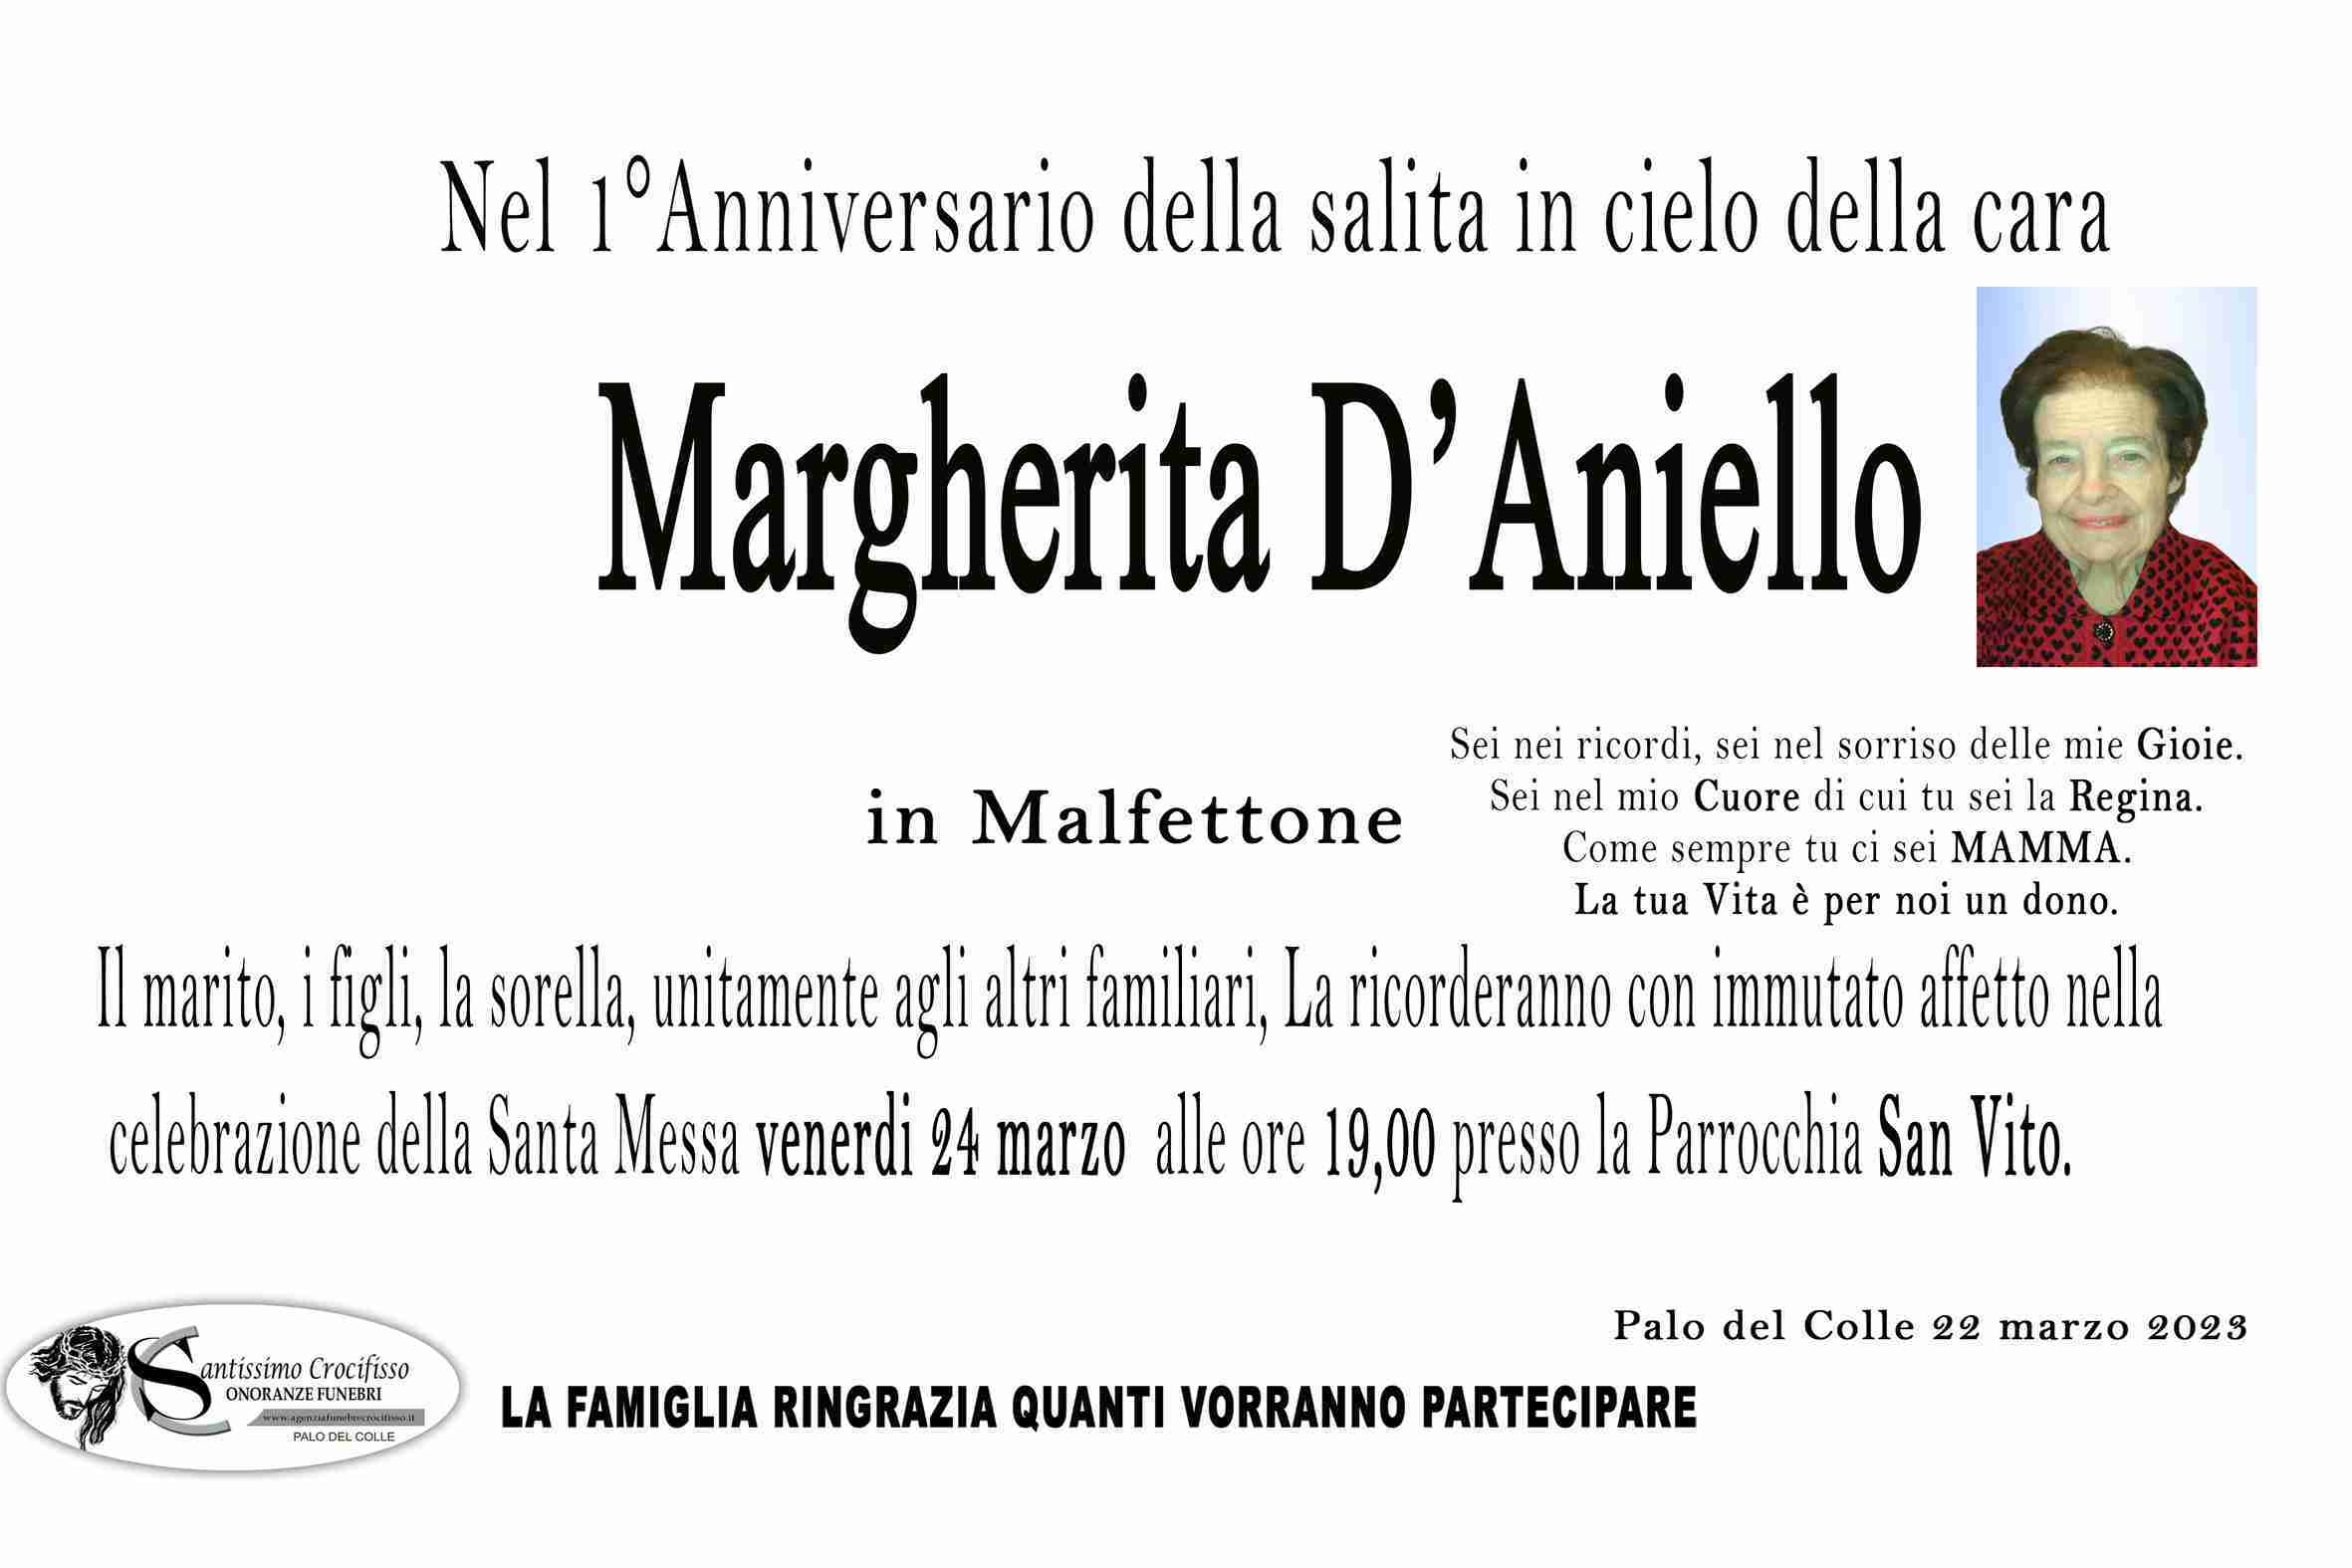 Margherita D'Aniello